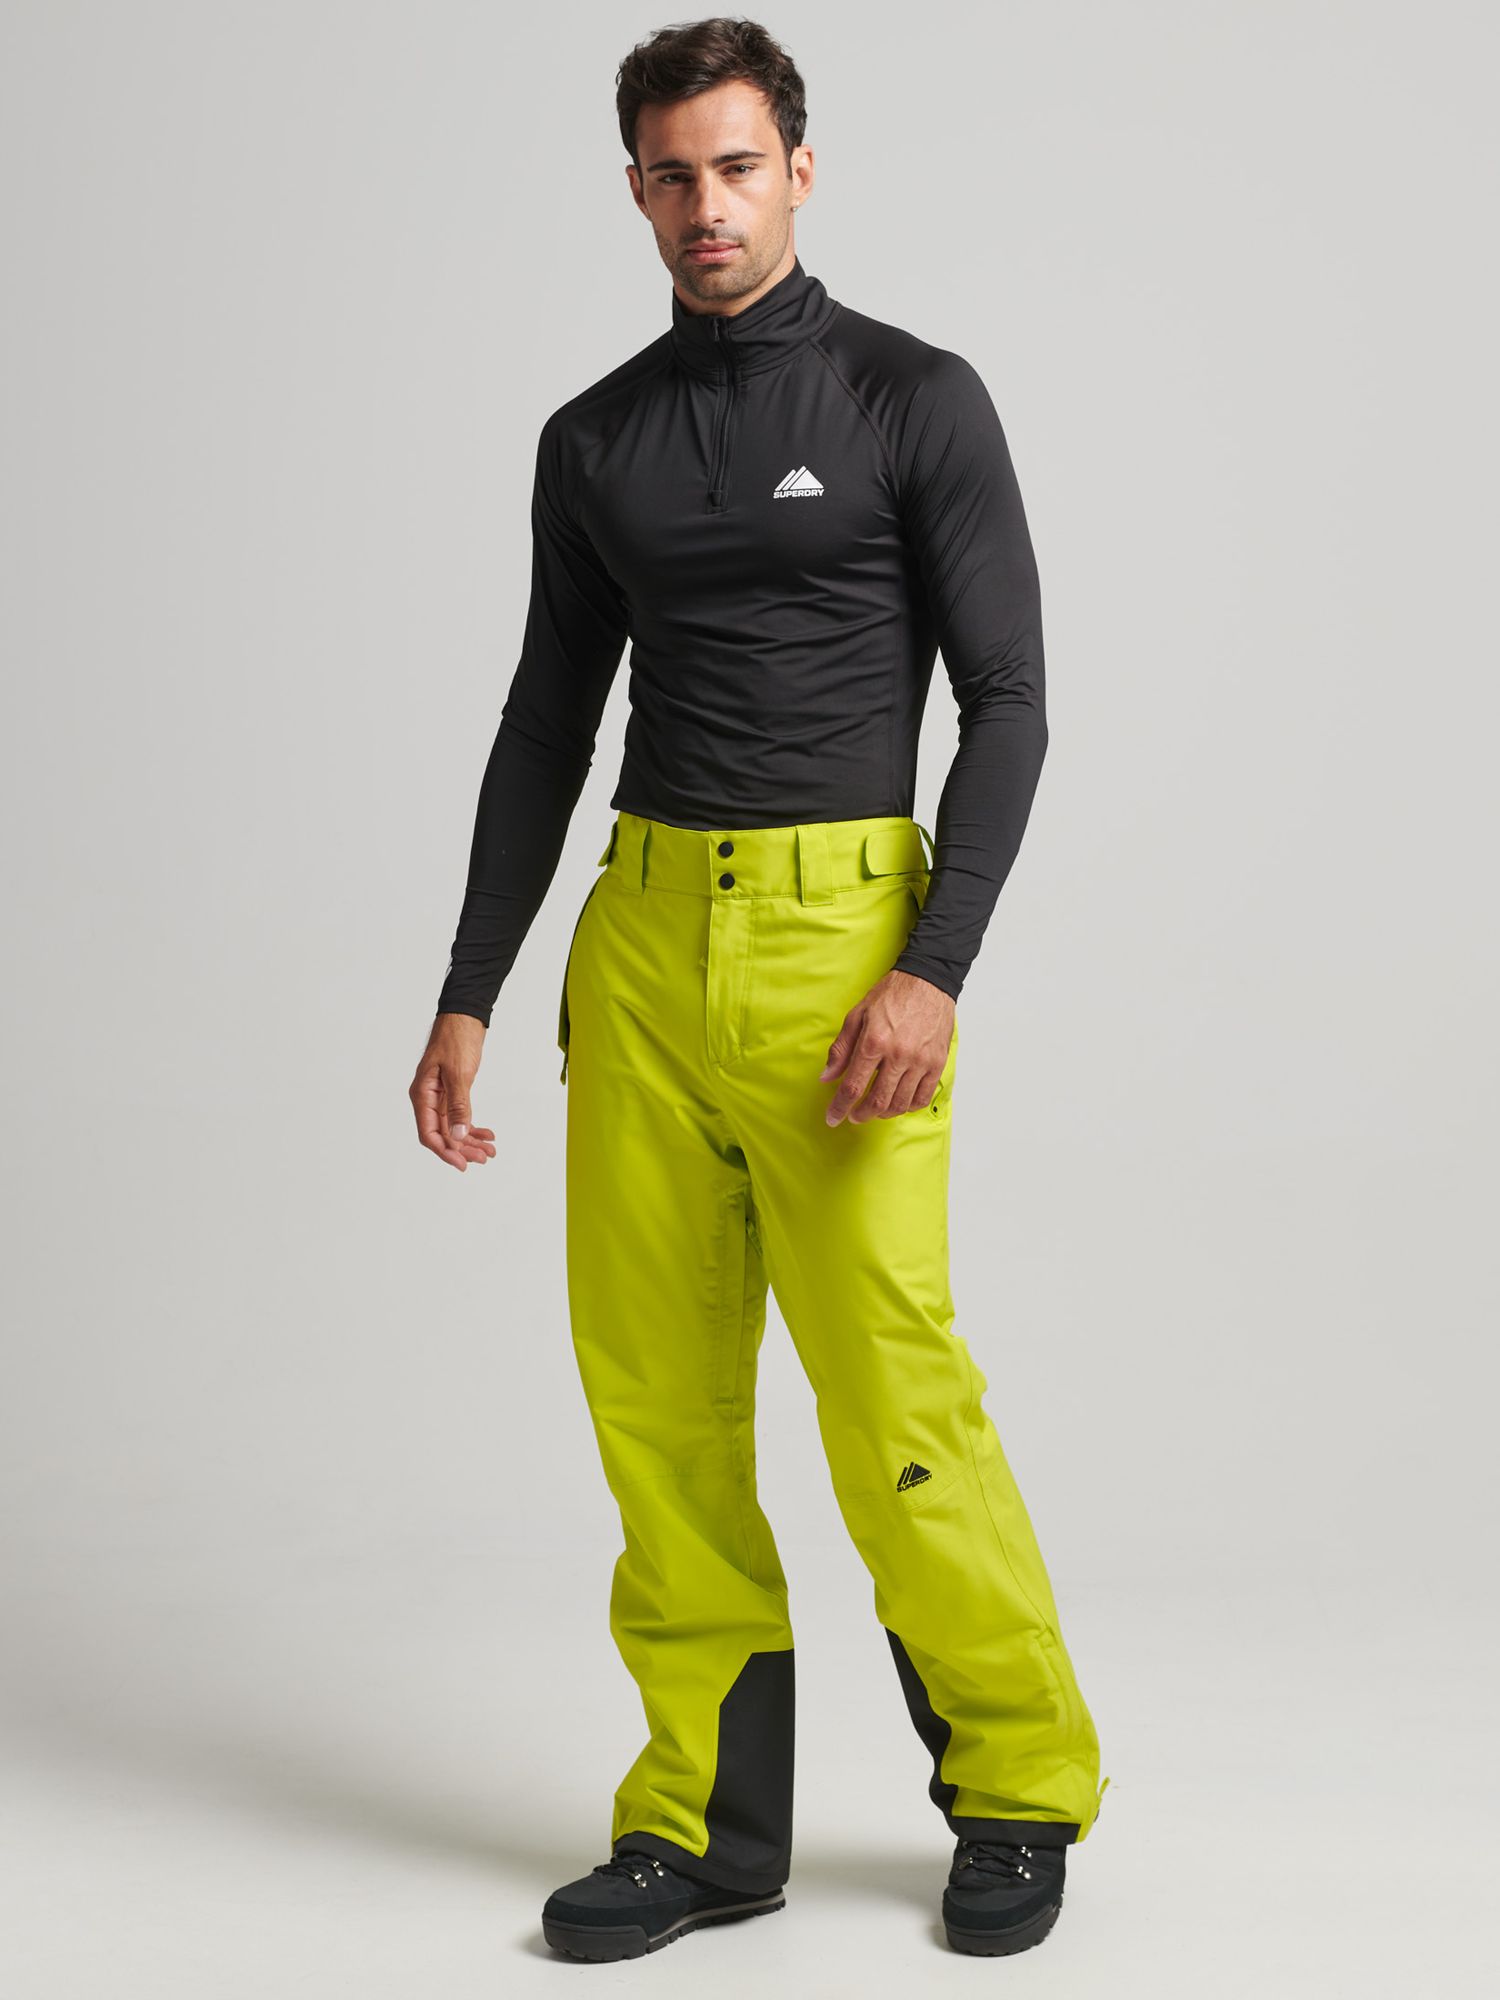 Superdry Snow Ultra Ski Trousers, Sulphur Spring at John Lewis & Partners